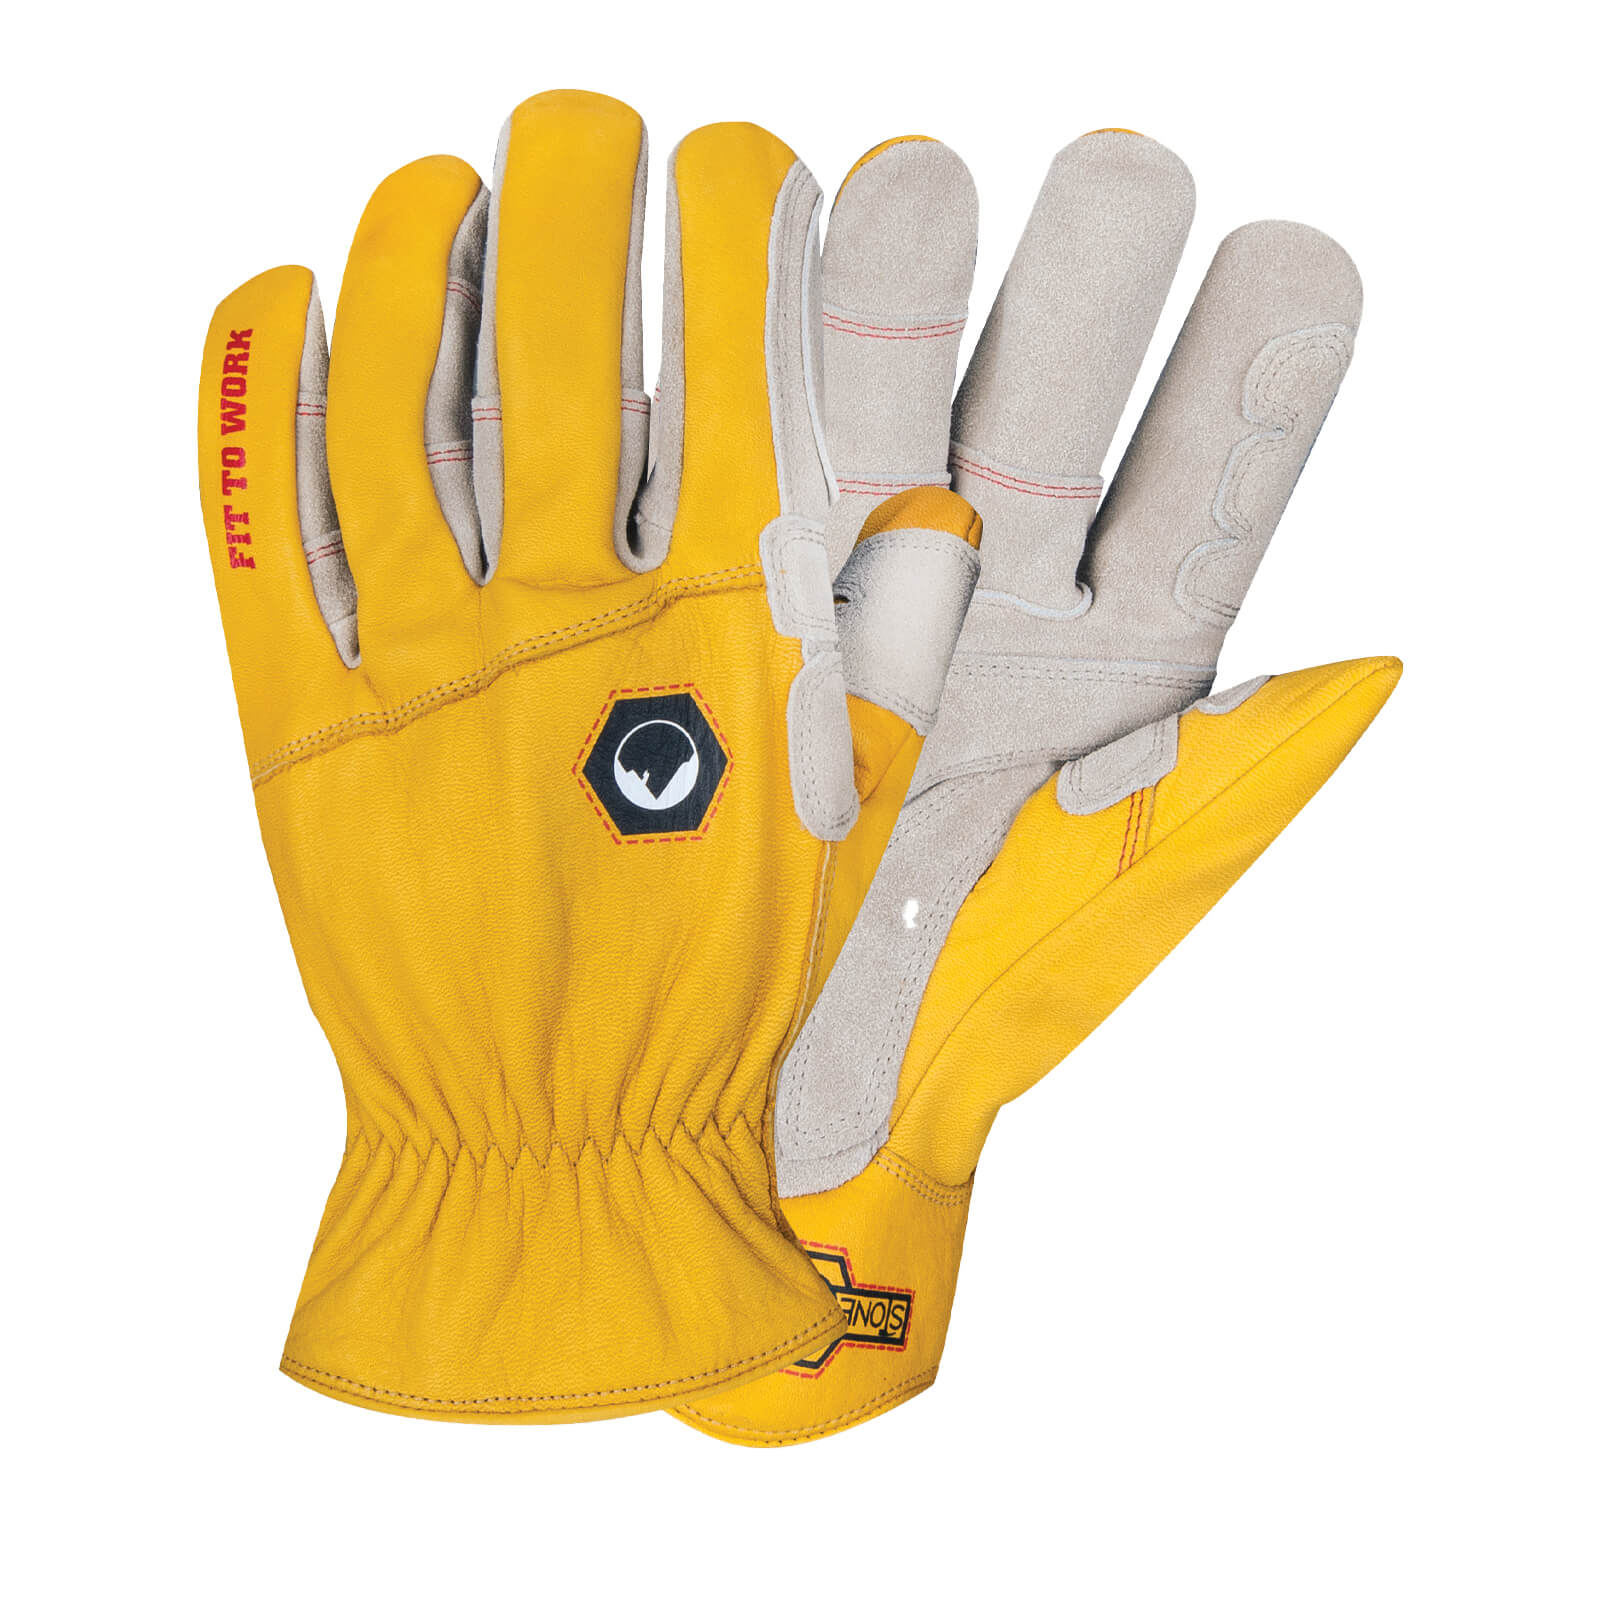 StoneBreaker Rancher Leather Work Gloves- Large